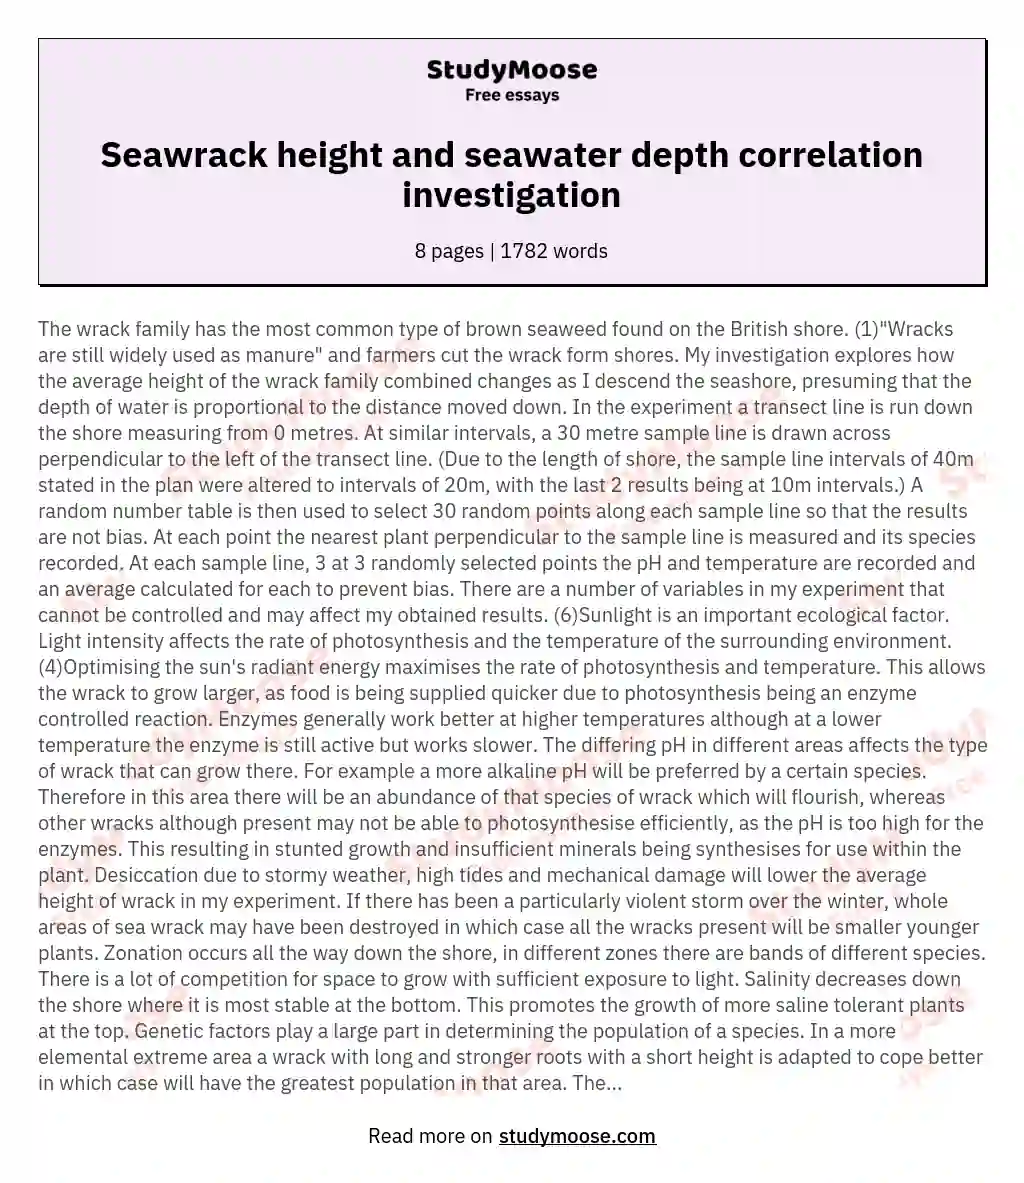 Seawrack height and seawater depth correlation investigation essay